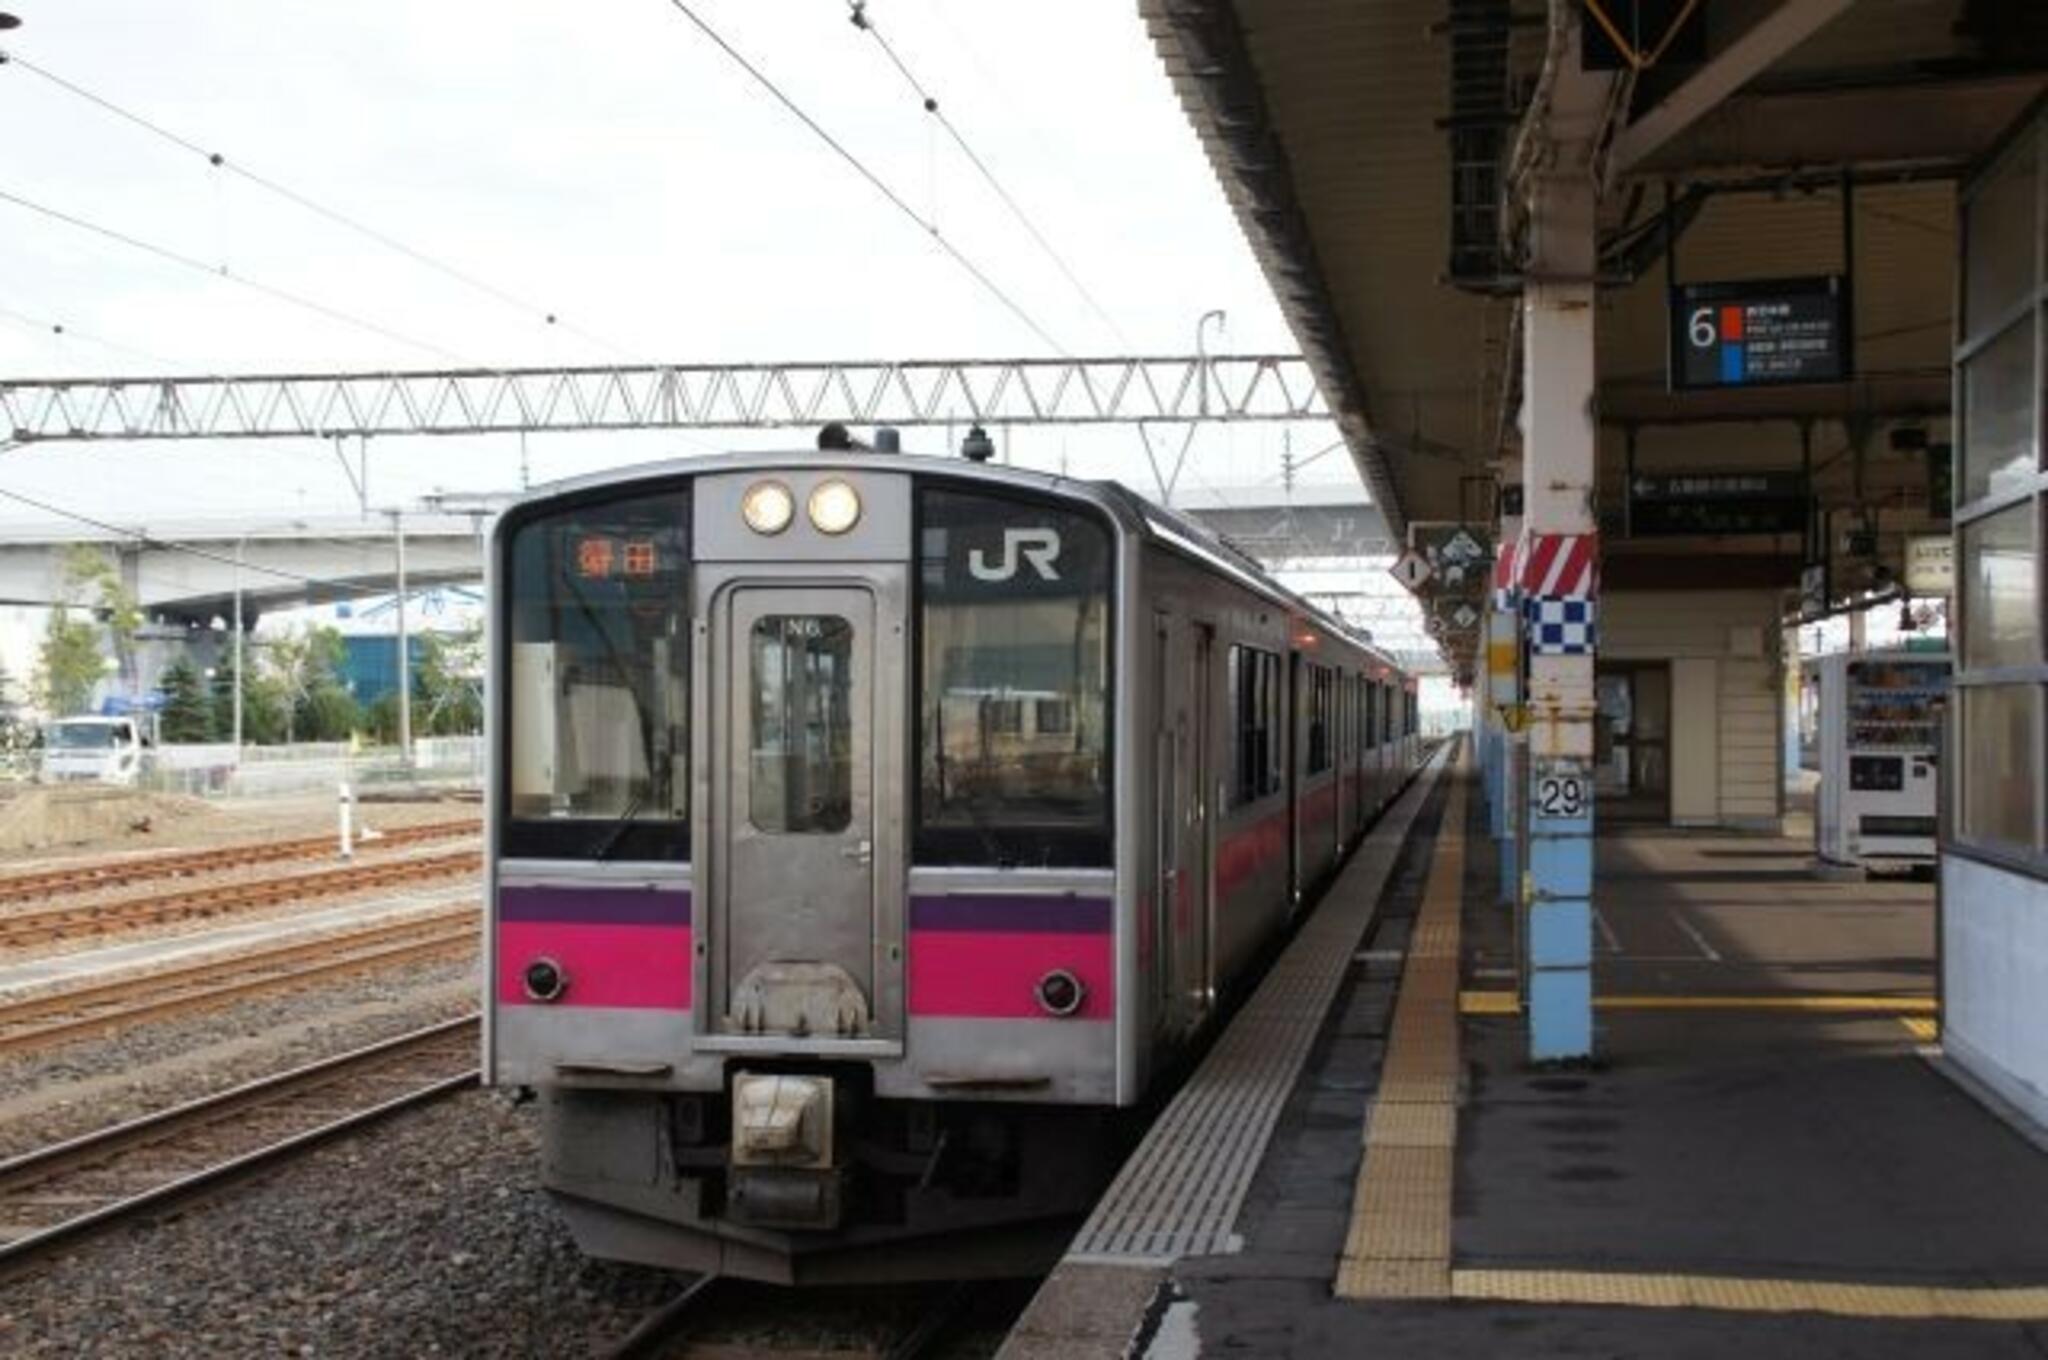 蟹田駅 - 東津軽郡外ヶ浜町字上蟹田/駅(JR在来線) | Yahoo!マップ